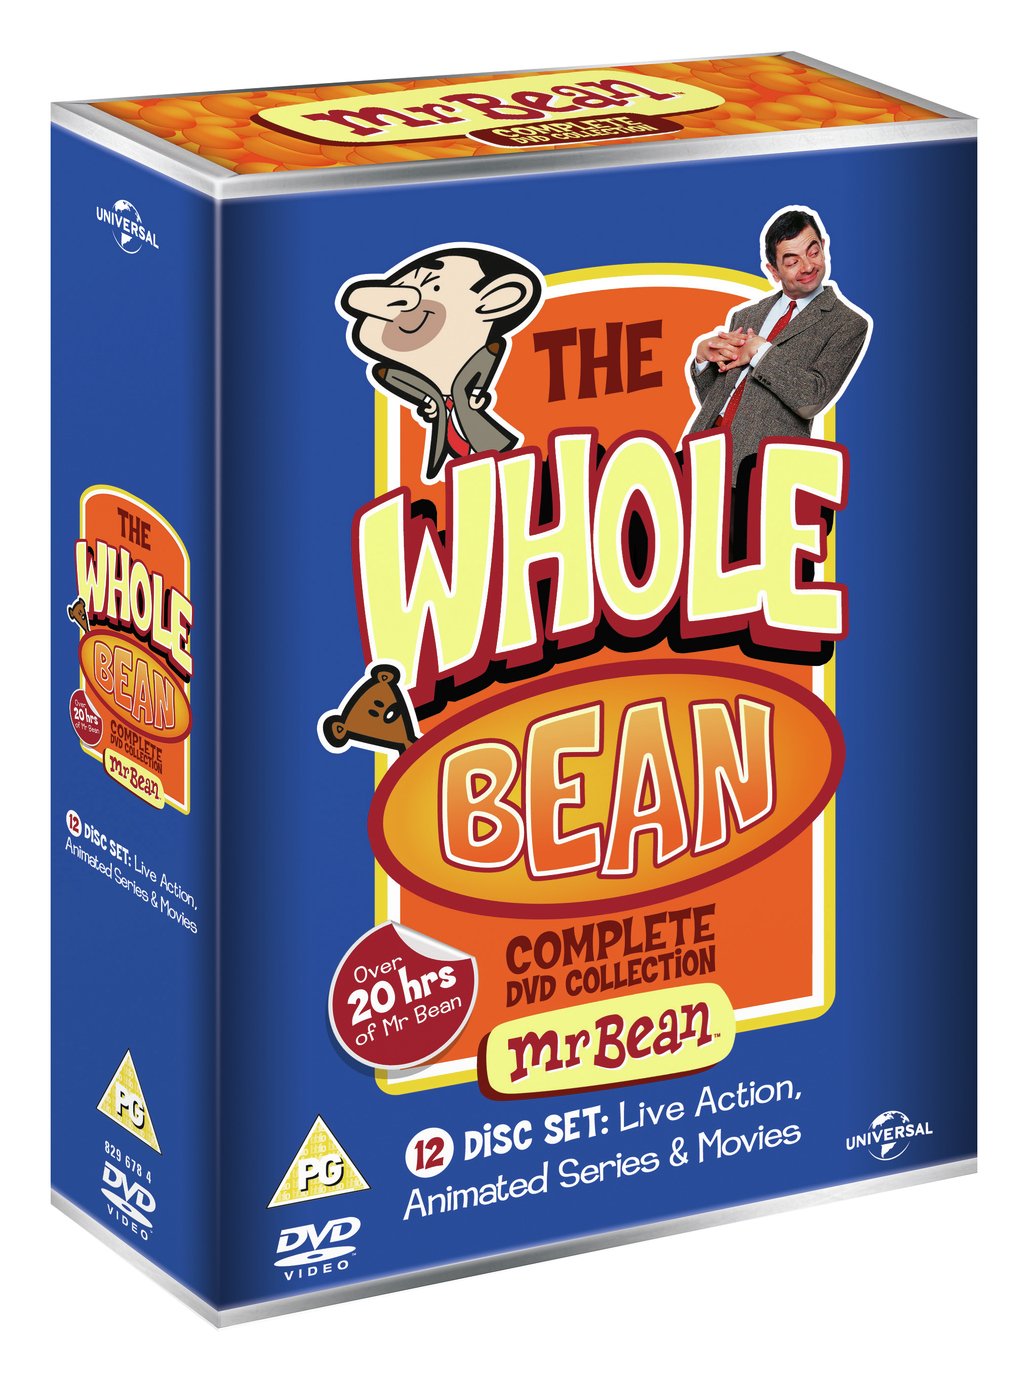 Mr Bean: The Whole Bean DVD Box Set Review